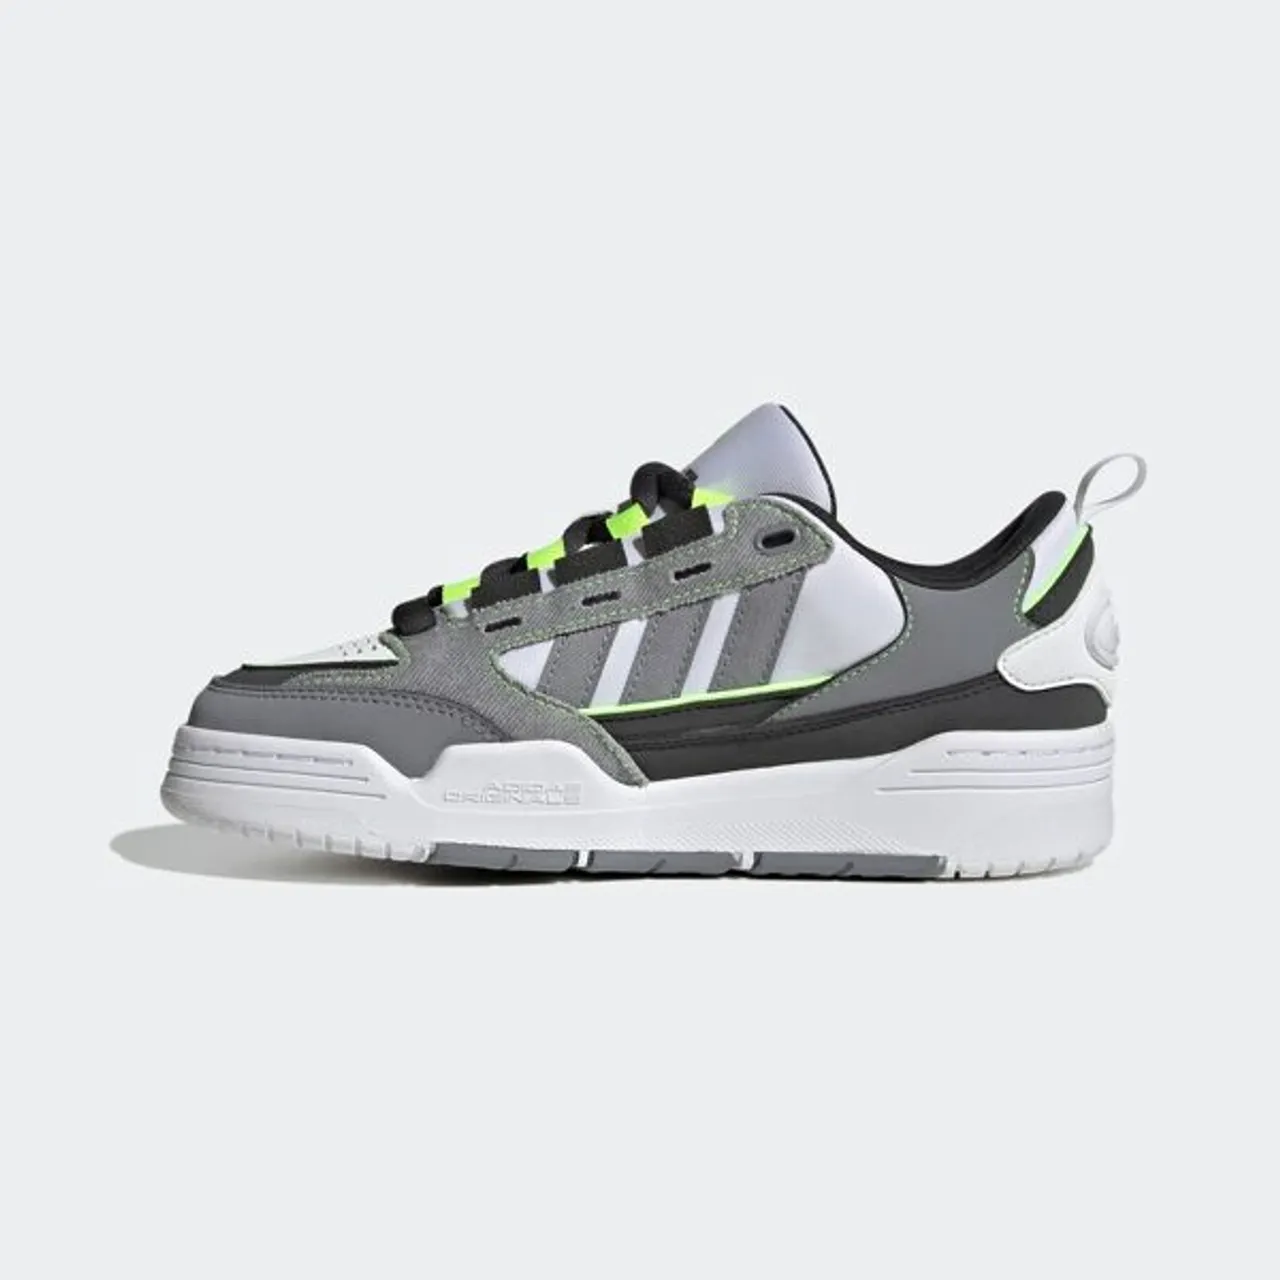 Sneaker ADIDAS ORIGINALS "ADI2000 KIDS" Gr. 38, weiß (cloud white, grey, core black) Kinder Schuhe Sneaker